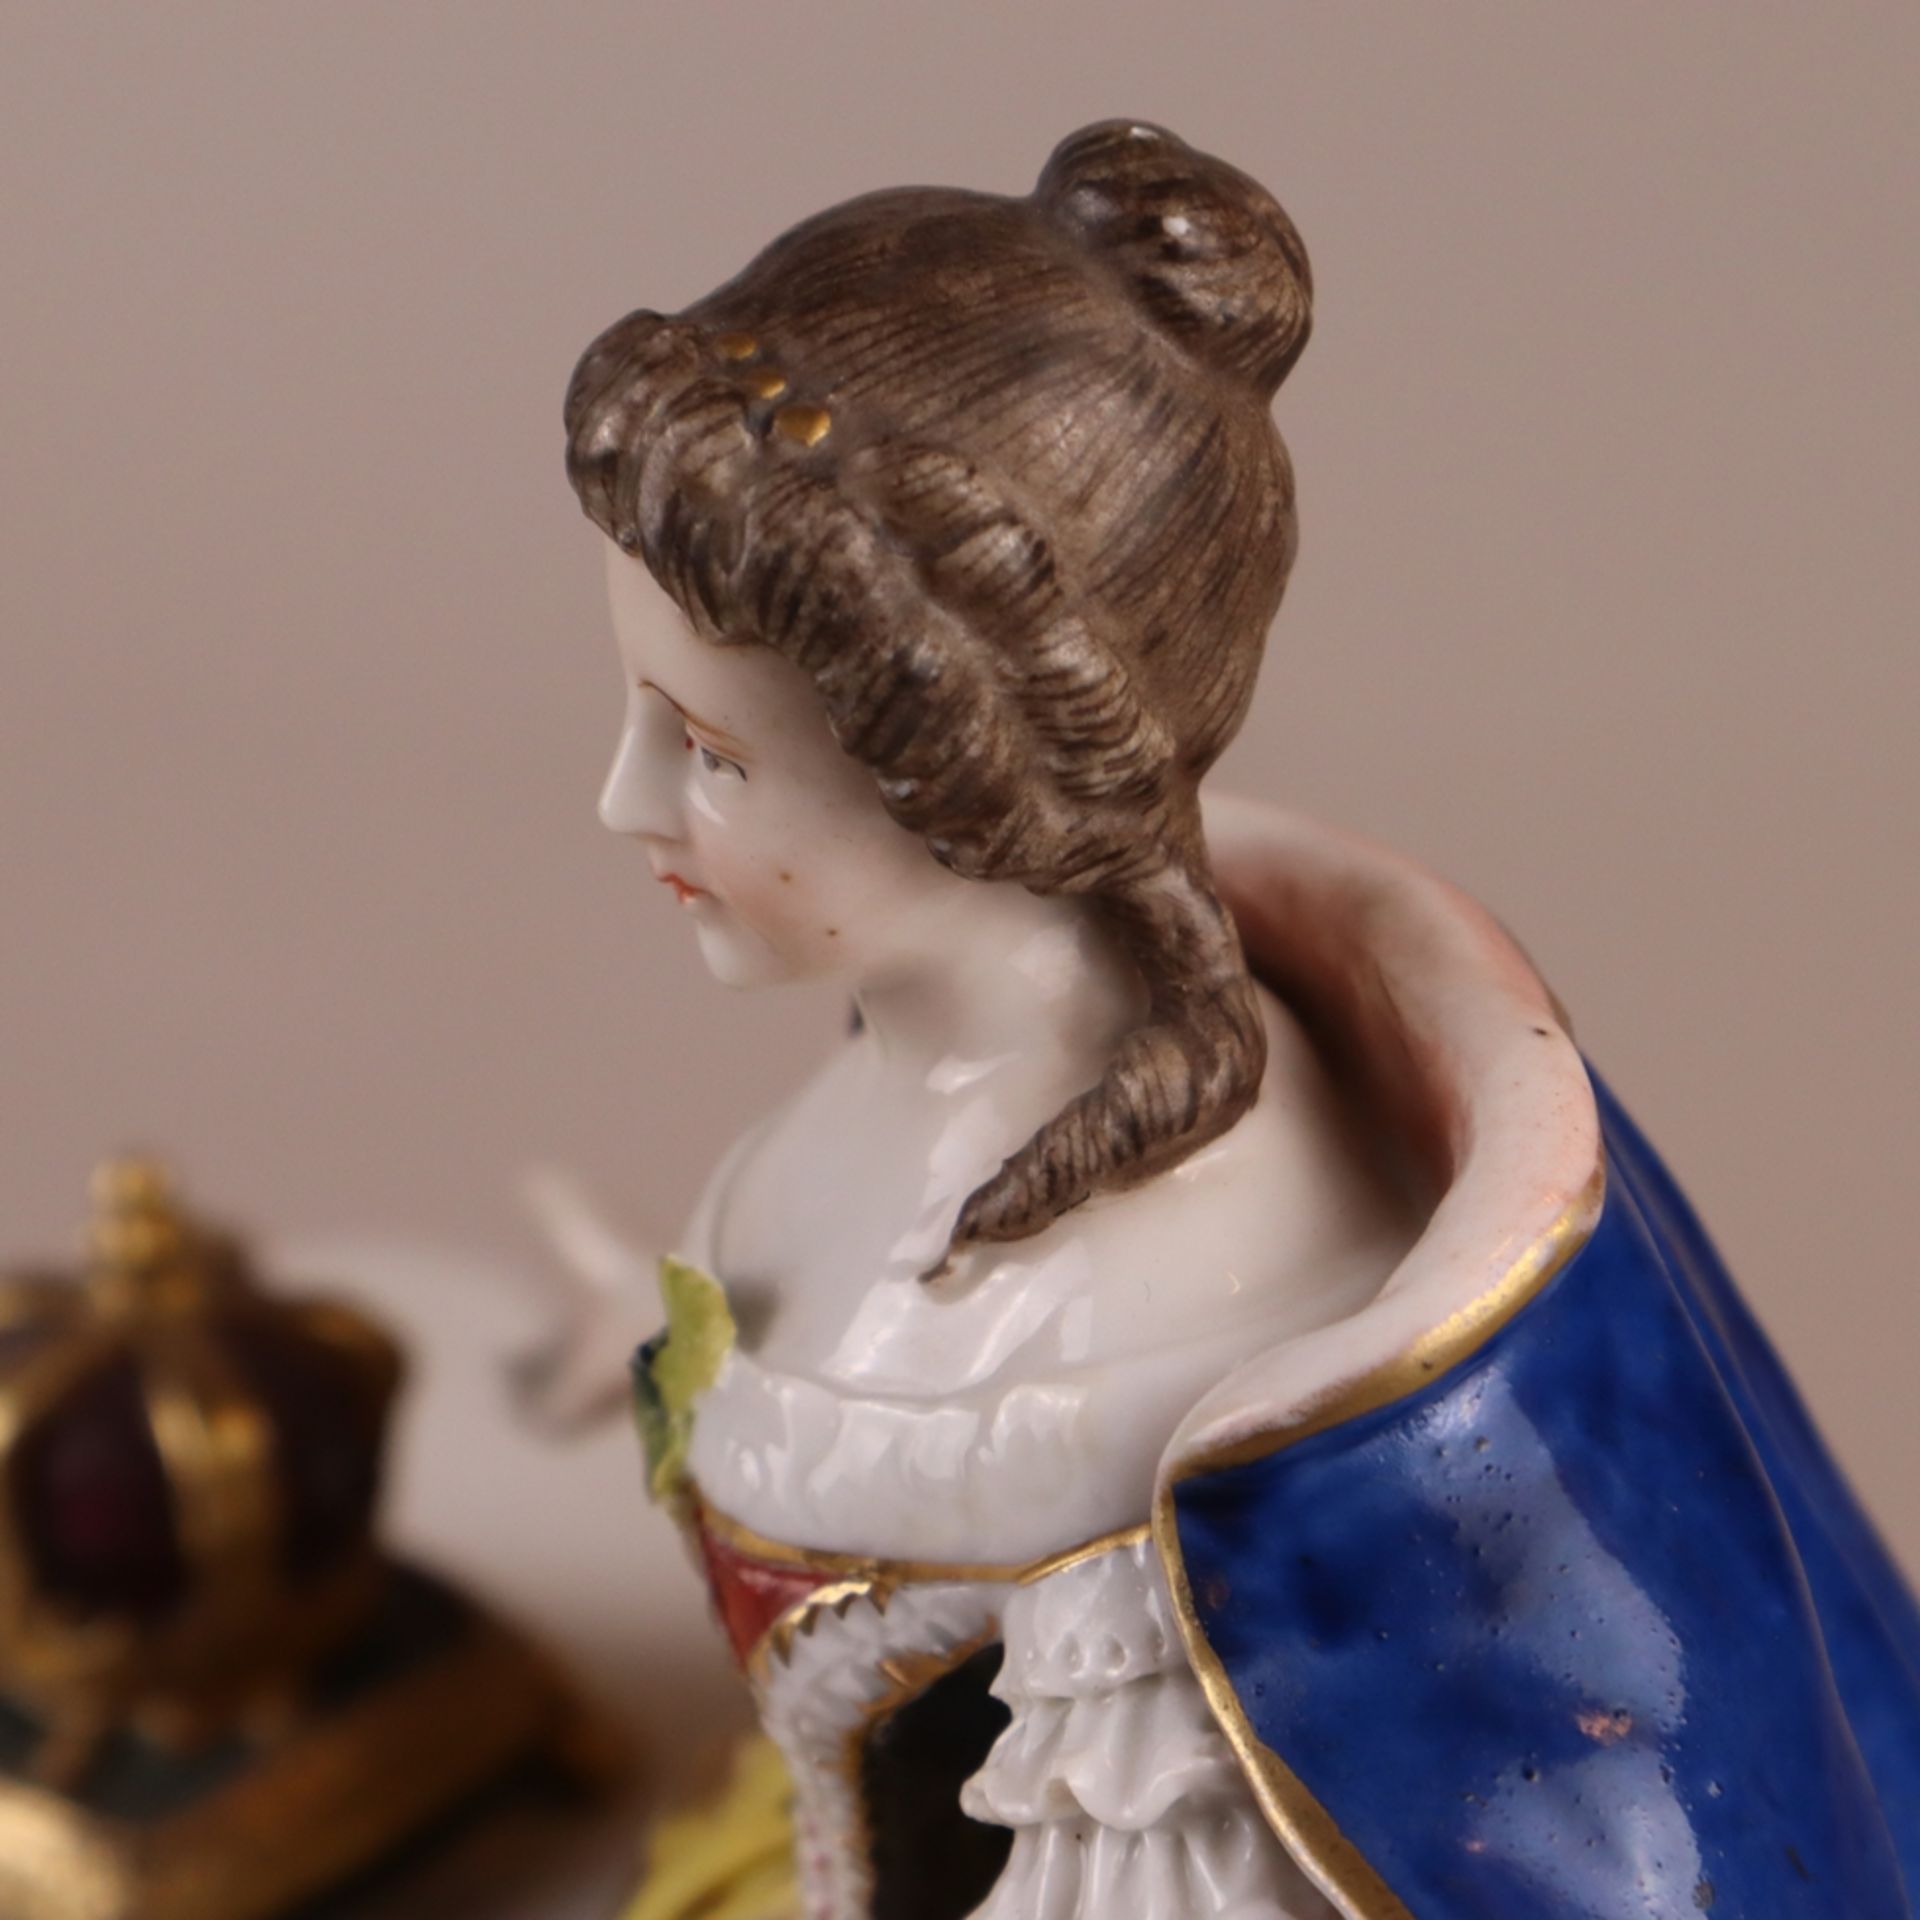 Porzellanskulptur "Königin" - Ludwigsburg, unterglasurblaue Manufakturmarke 1793-95, Weißporzellan, - Bild 4 aus 14